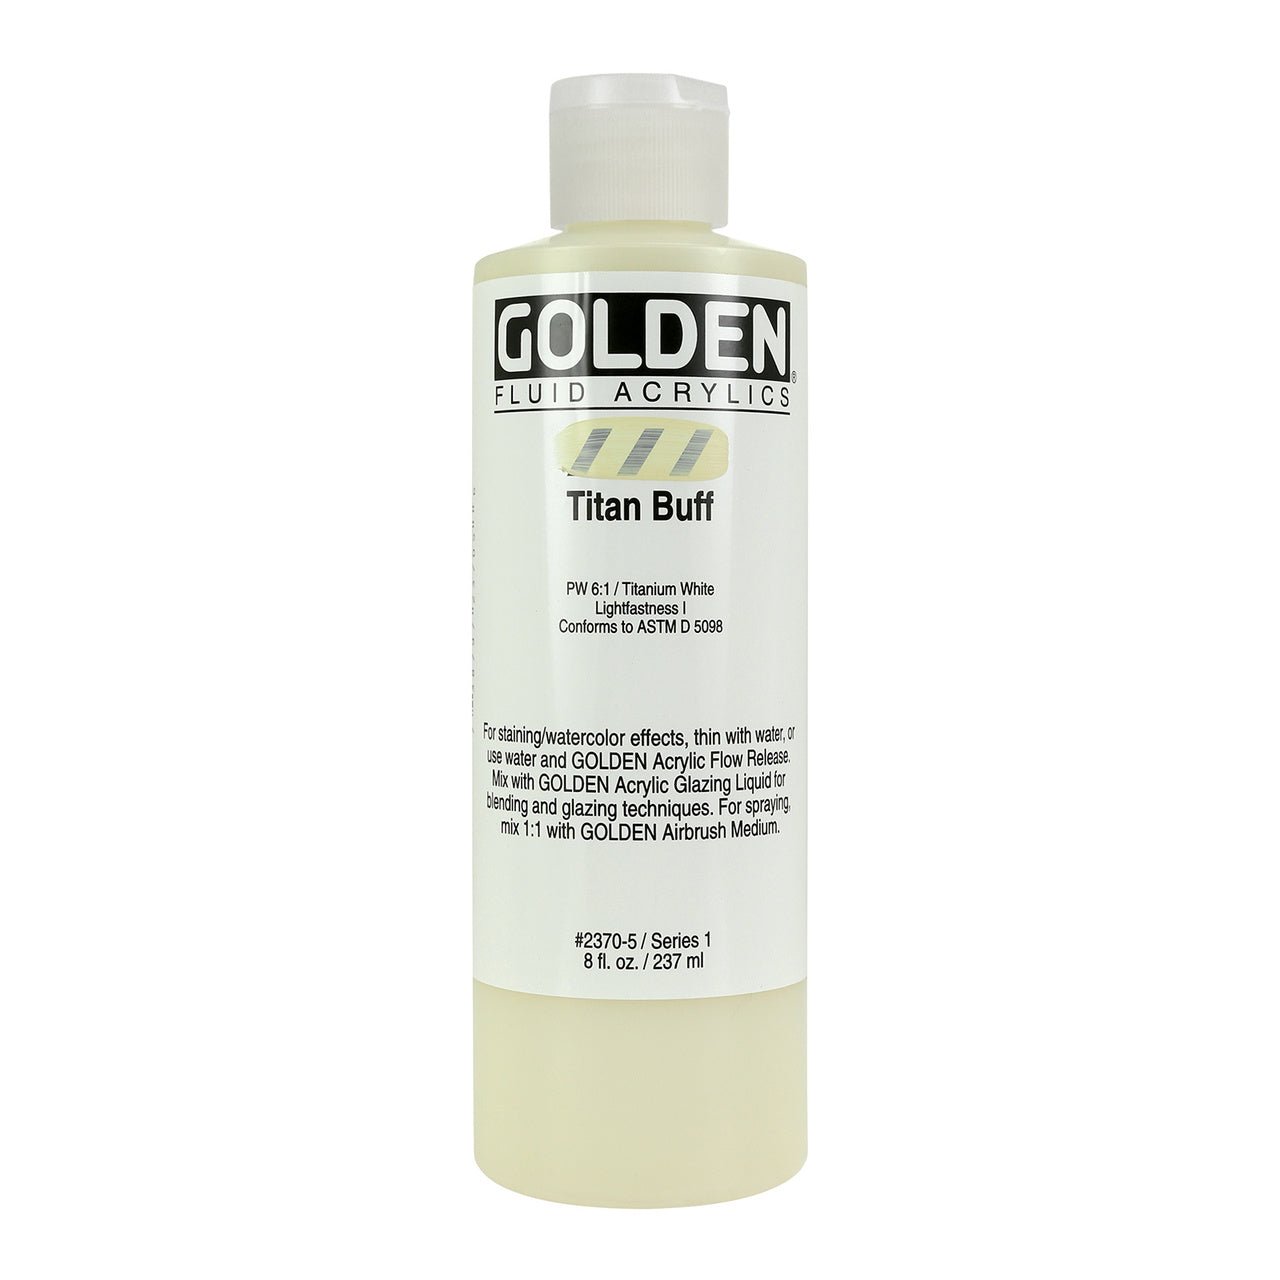 Golden Fluid Acrylic Titan Buff 8 oz - merriartist.com